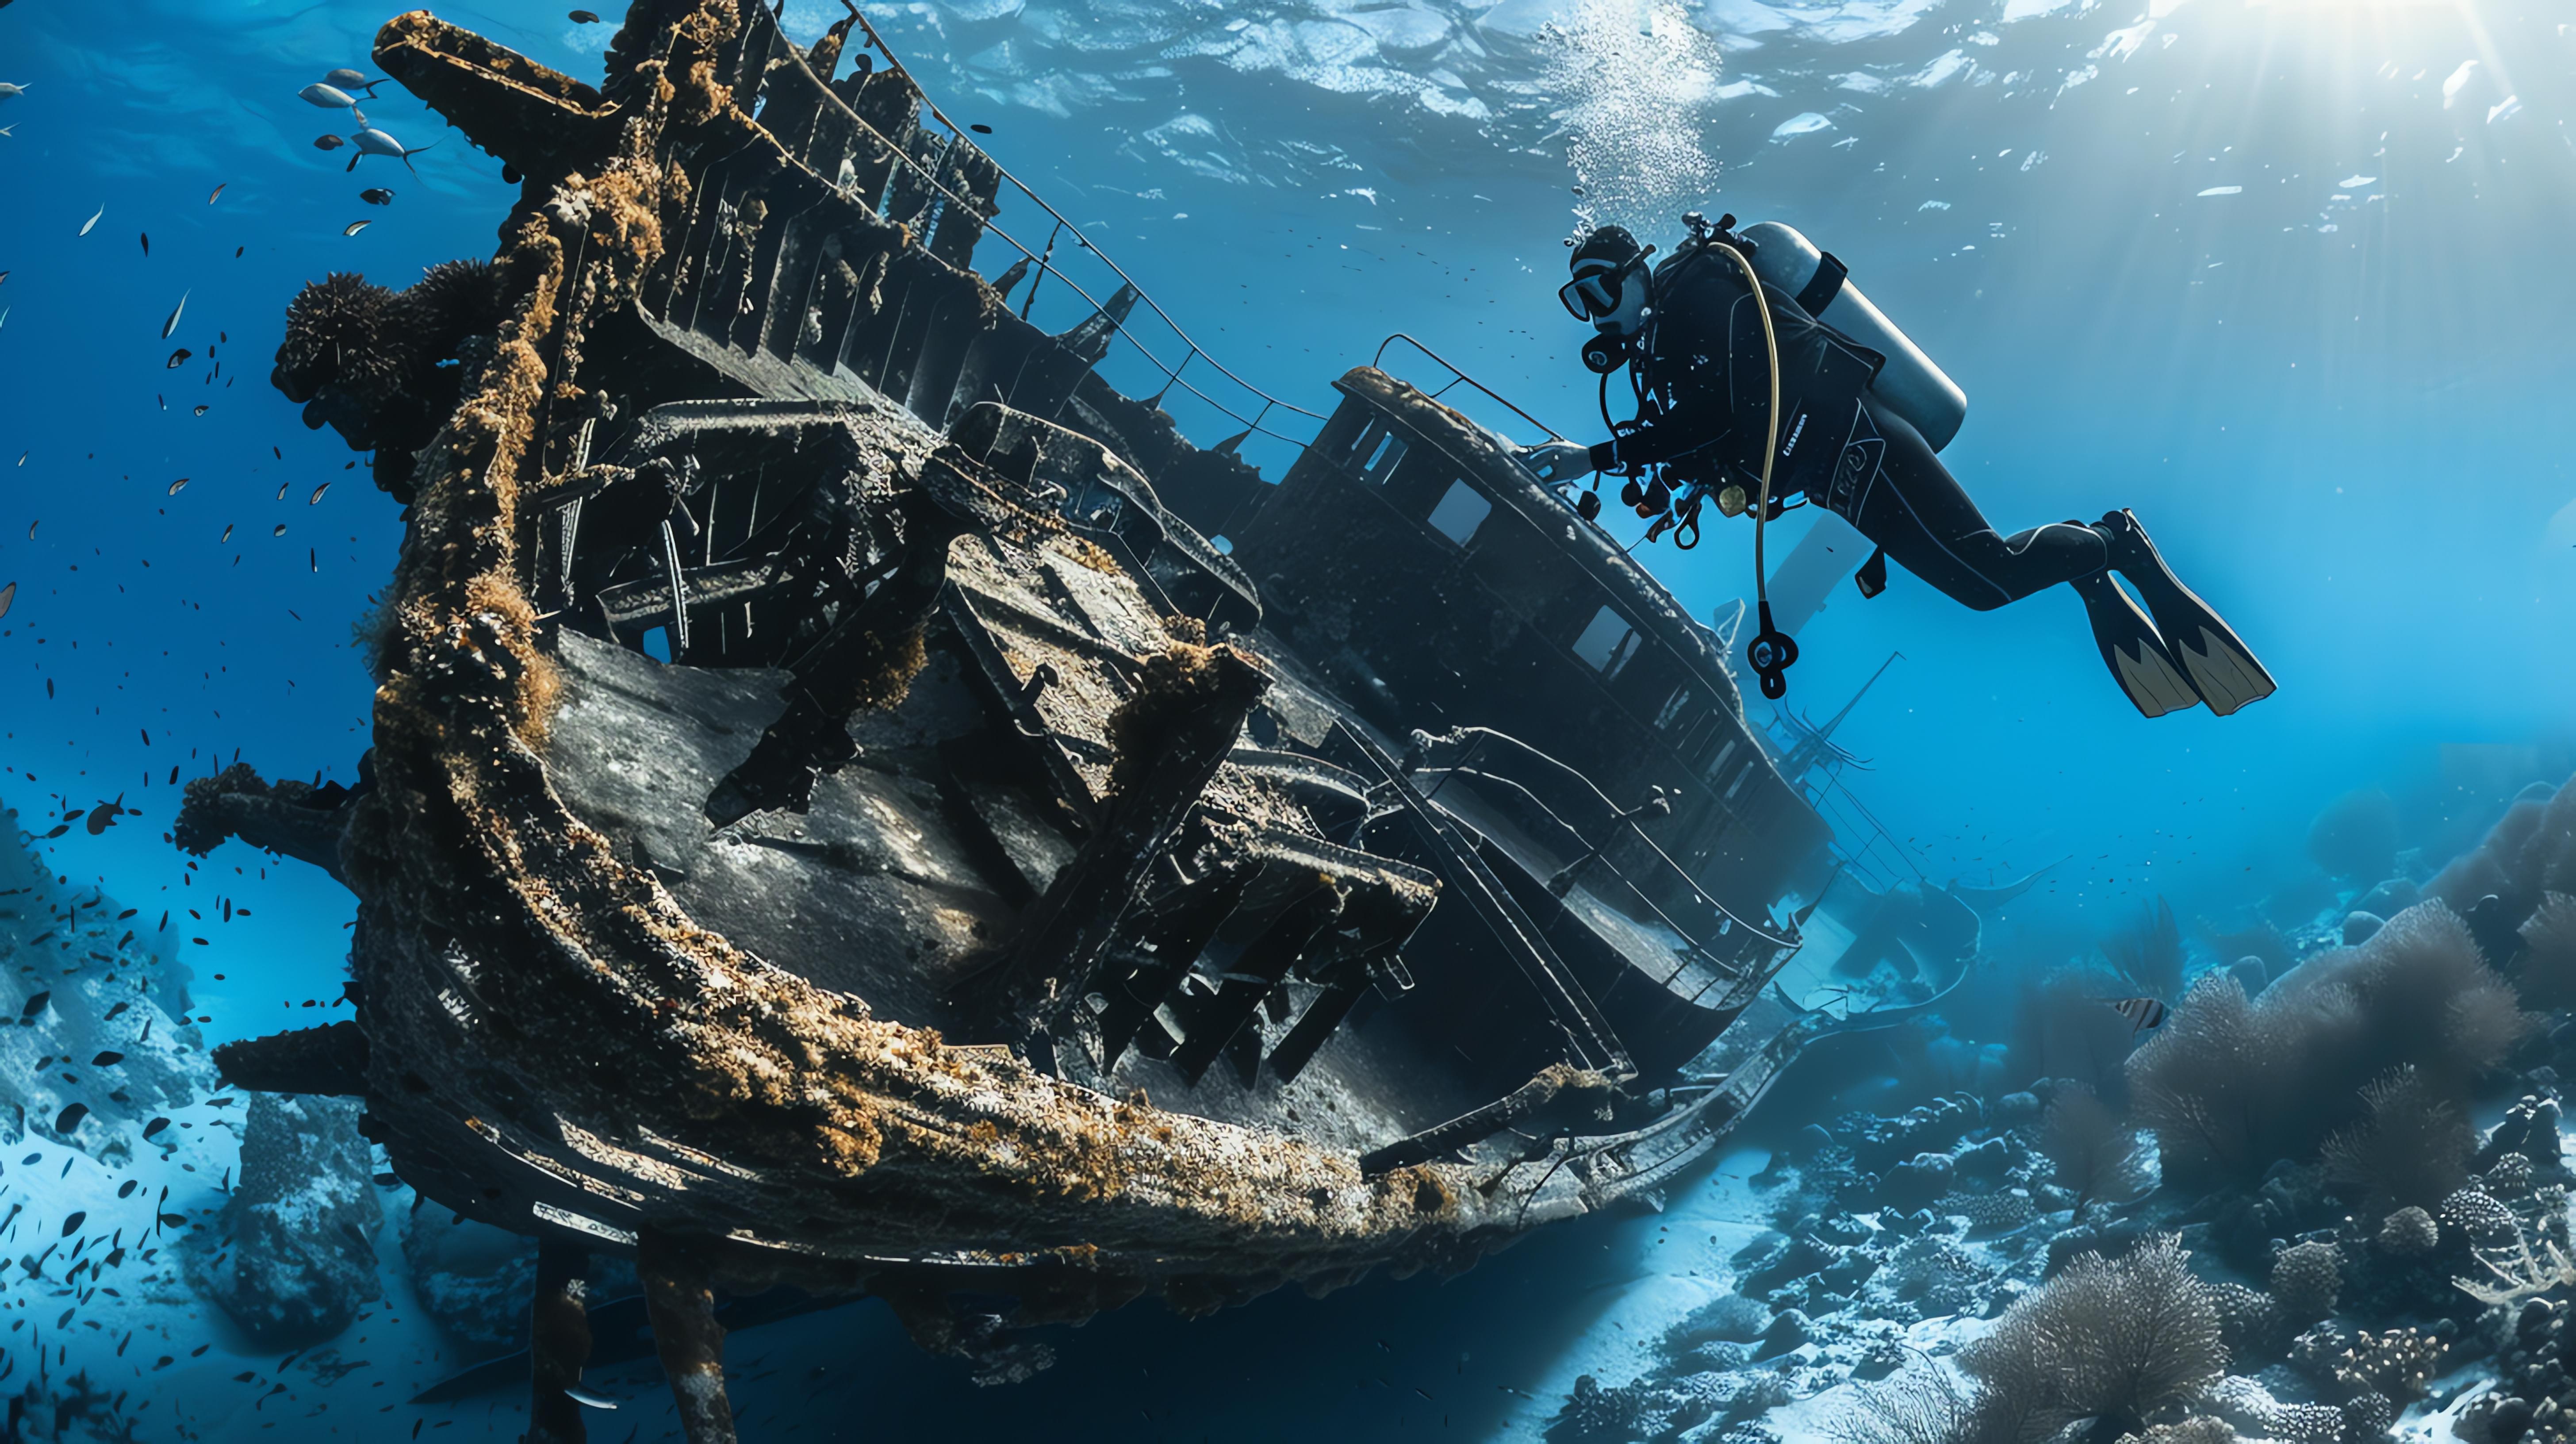 Underwater world. Scuba diver exploring a shipwreck - Bali dive resort